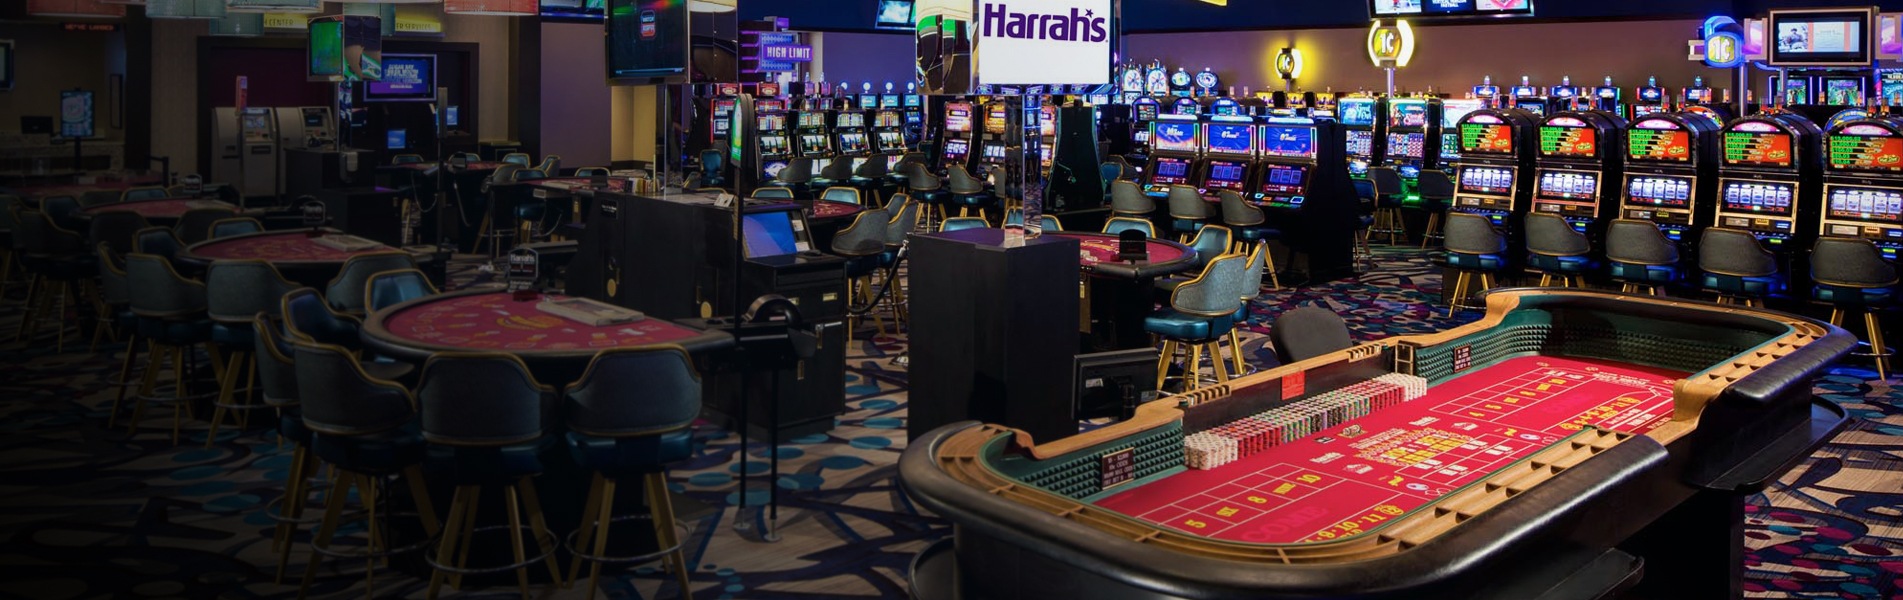 Harrahs Resort Atlantic City Casino 2